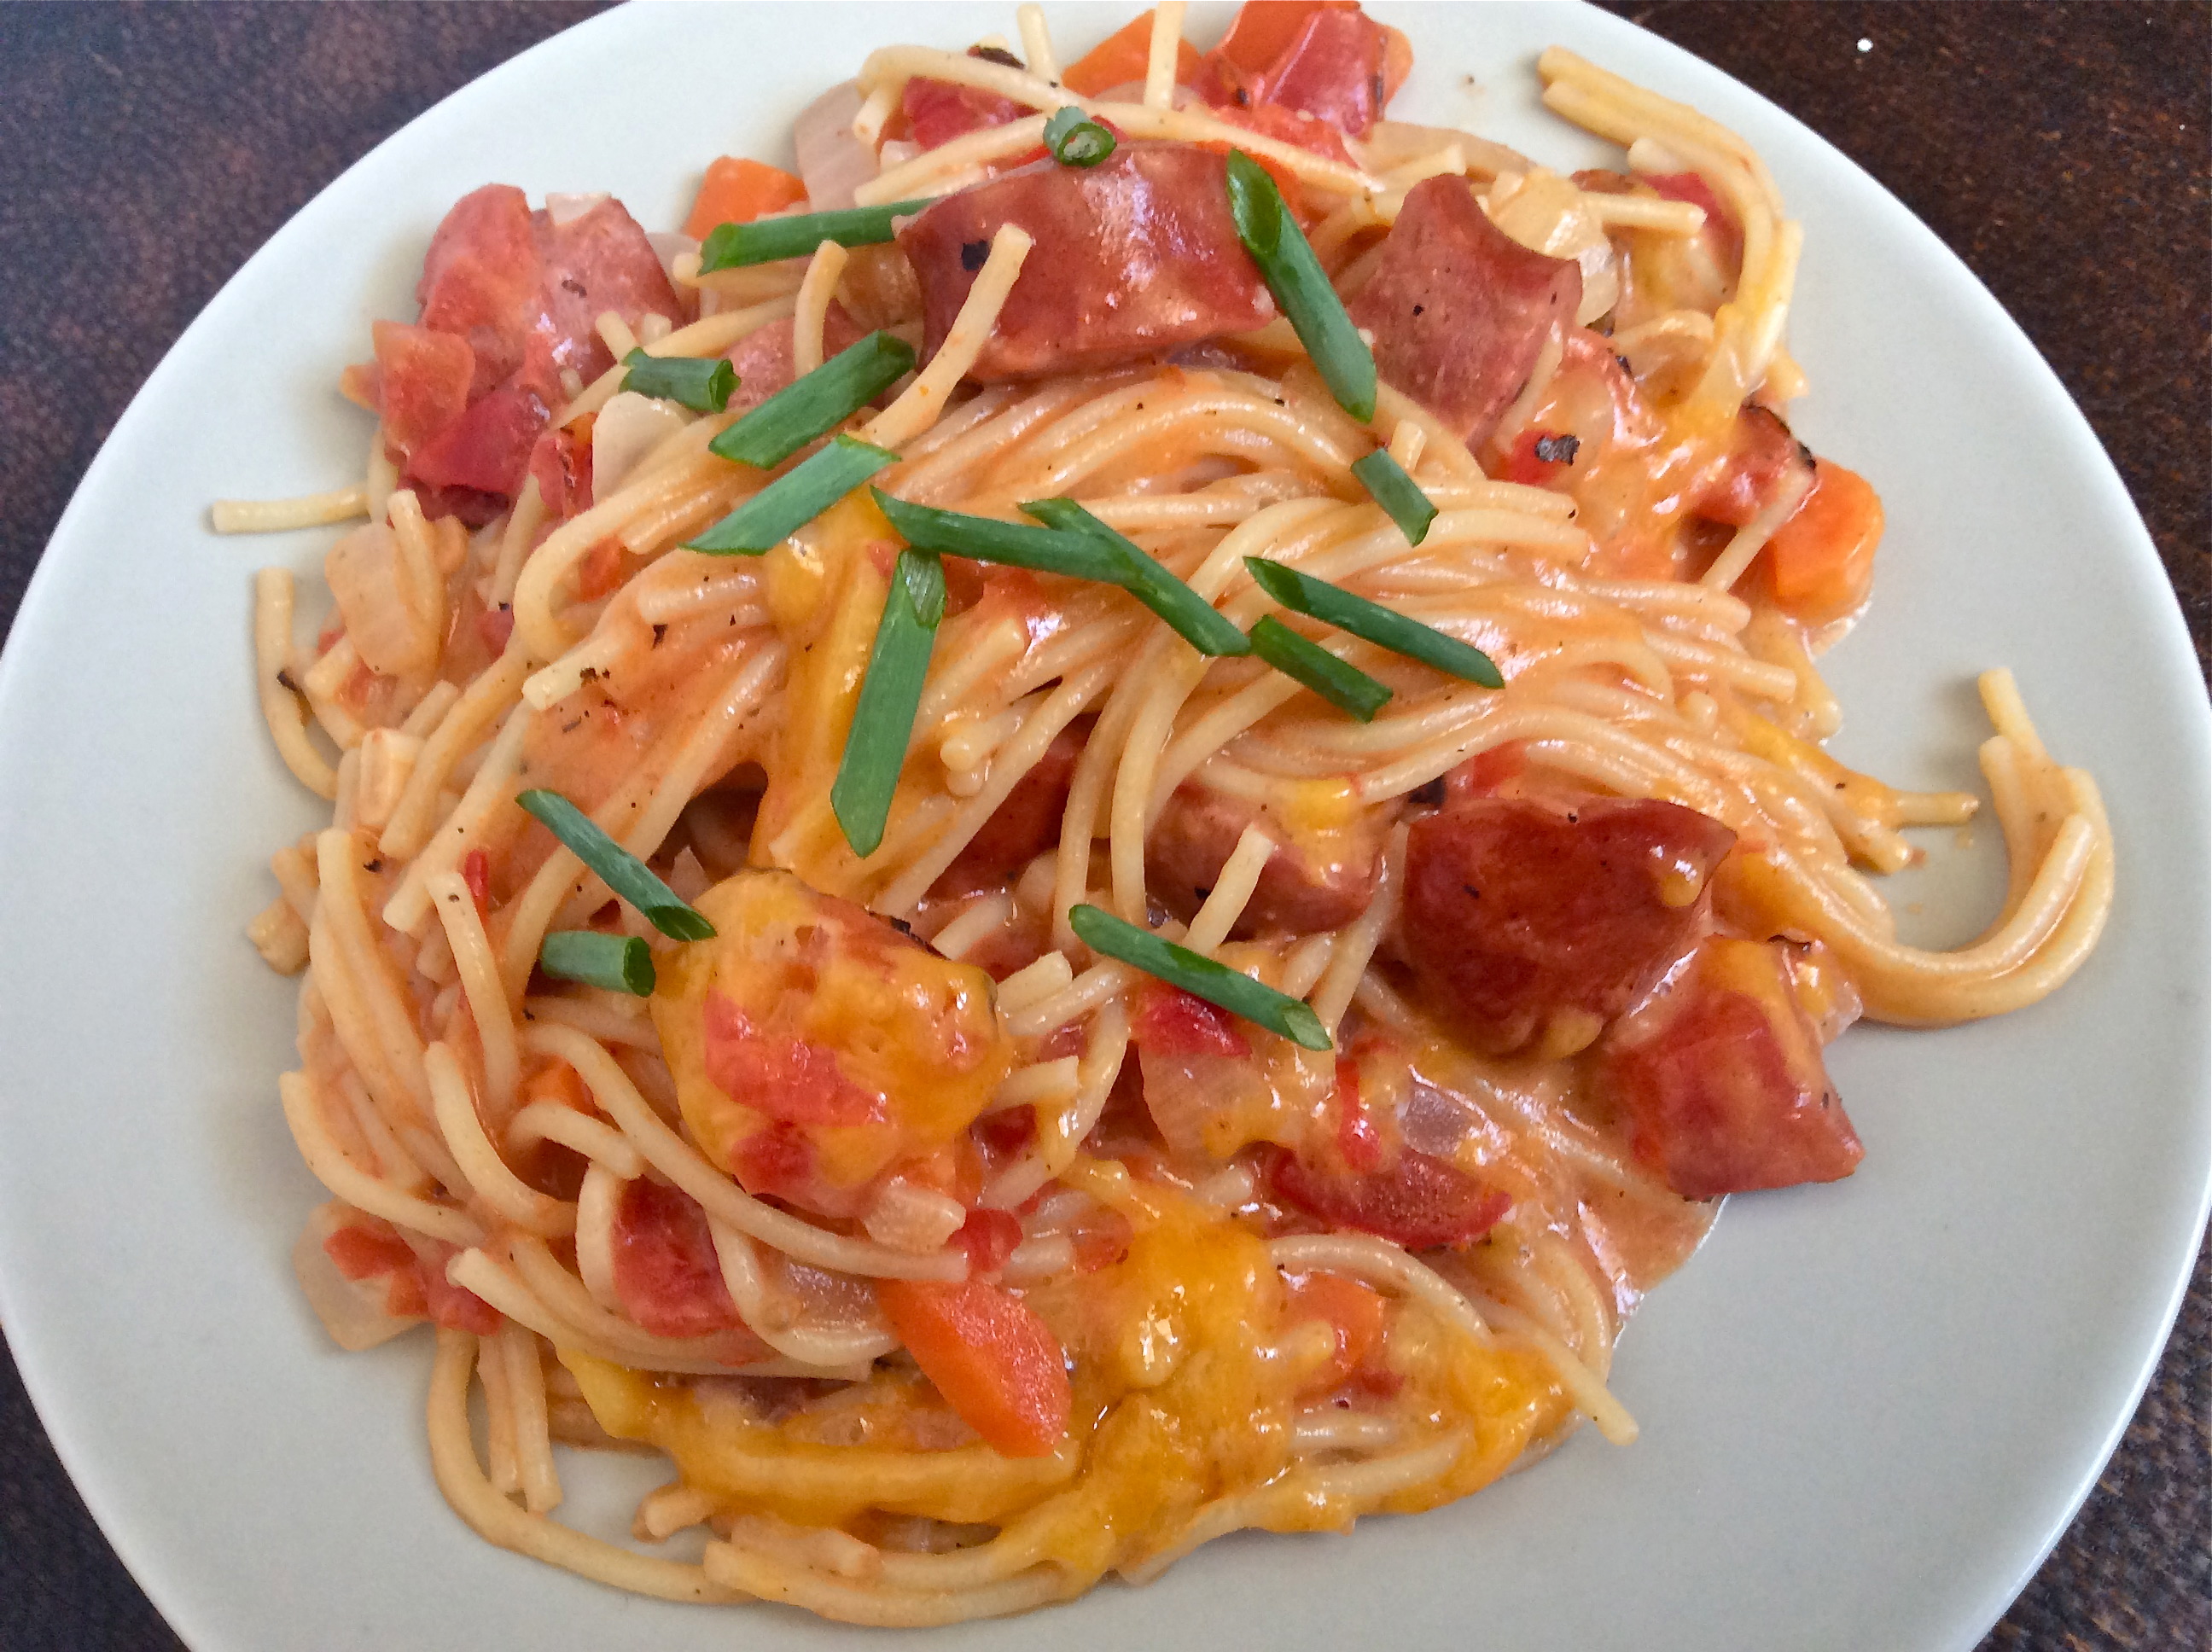 Spicy Sausage Skillet Spaghetti